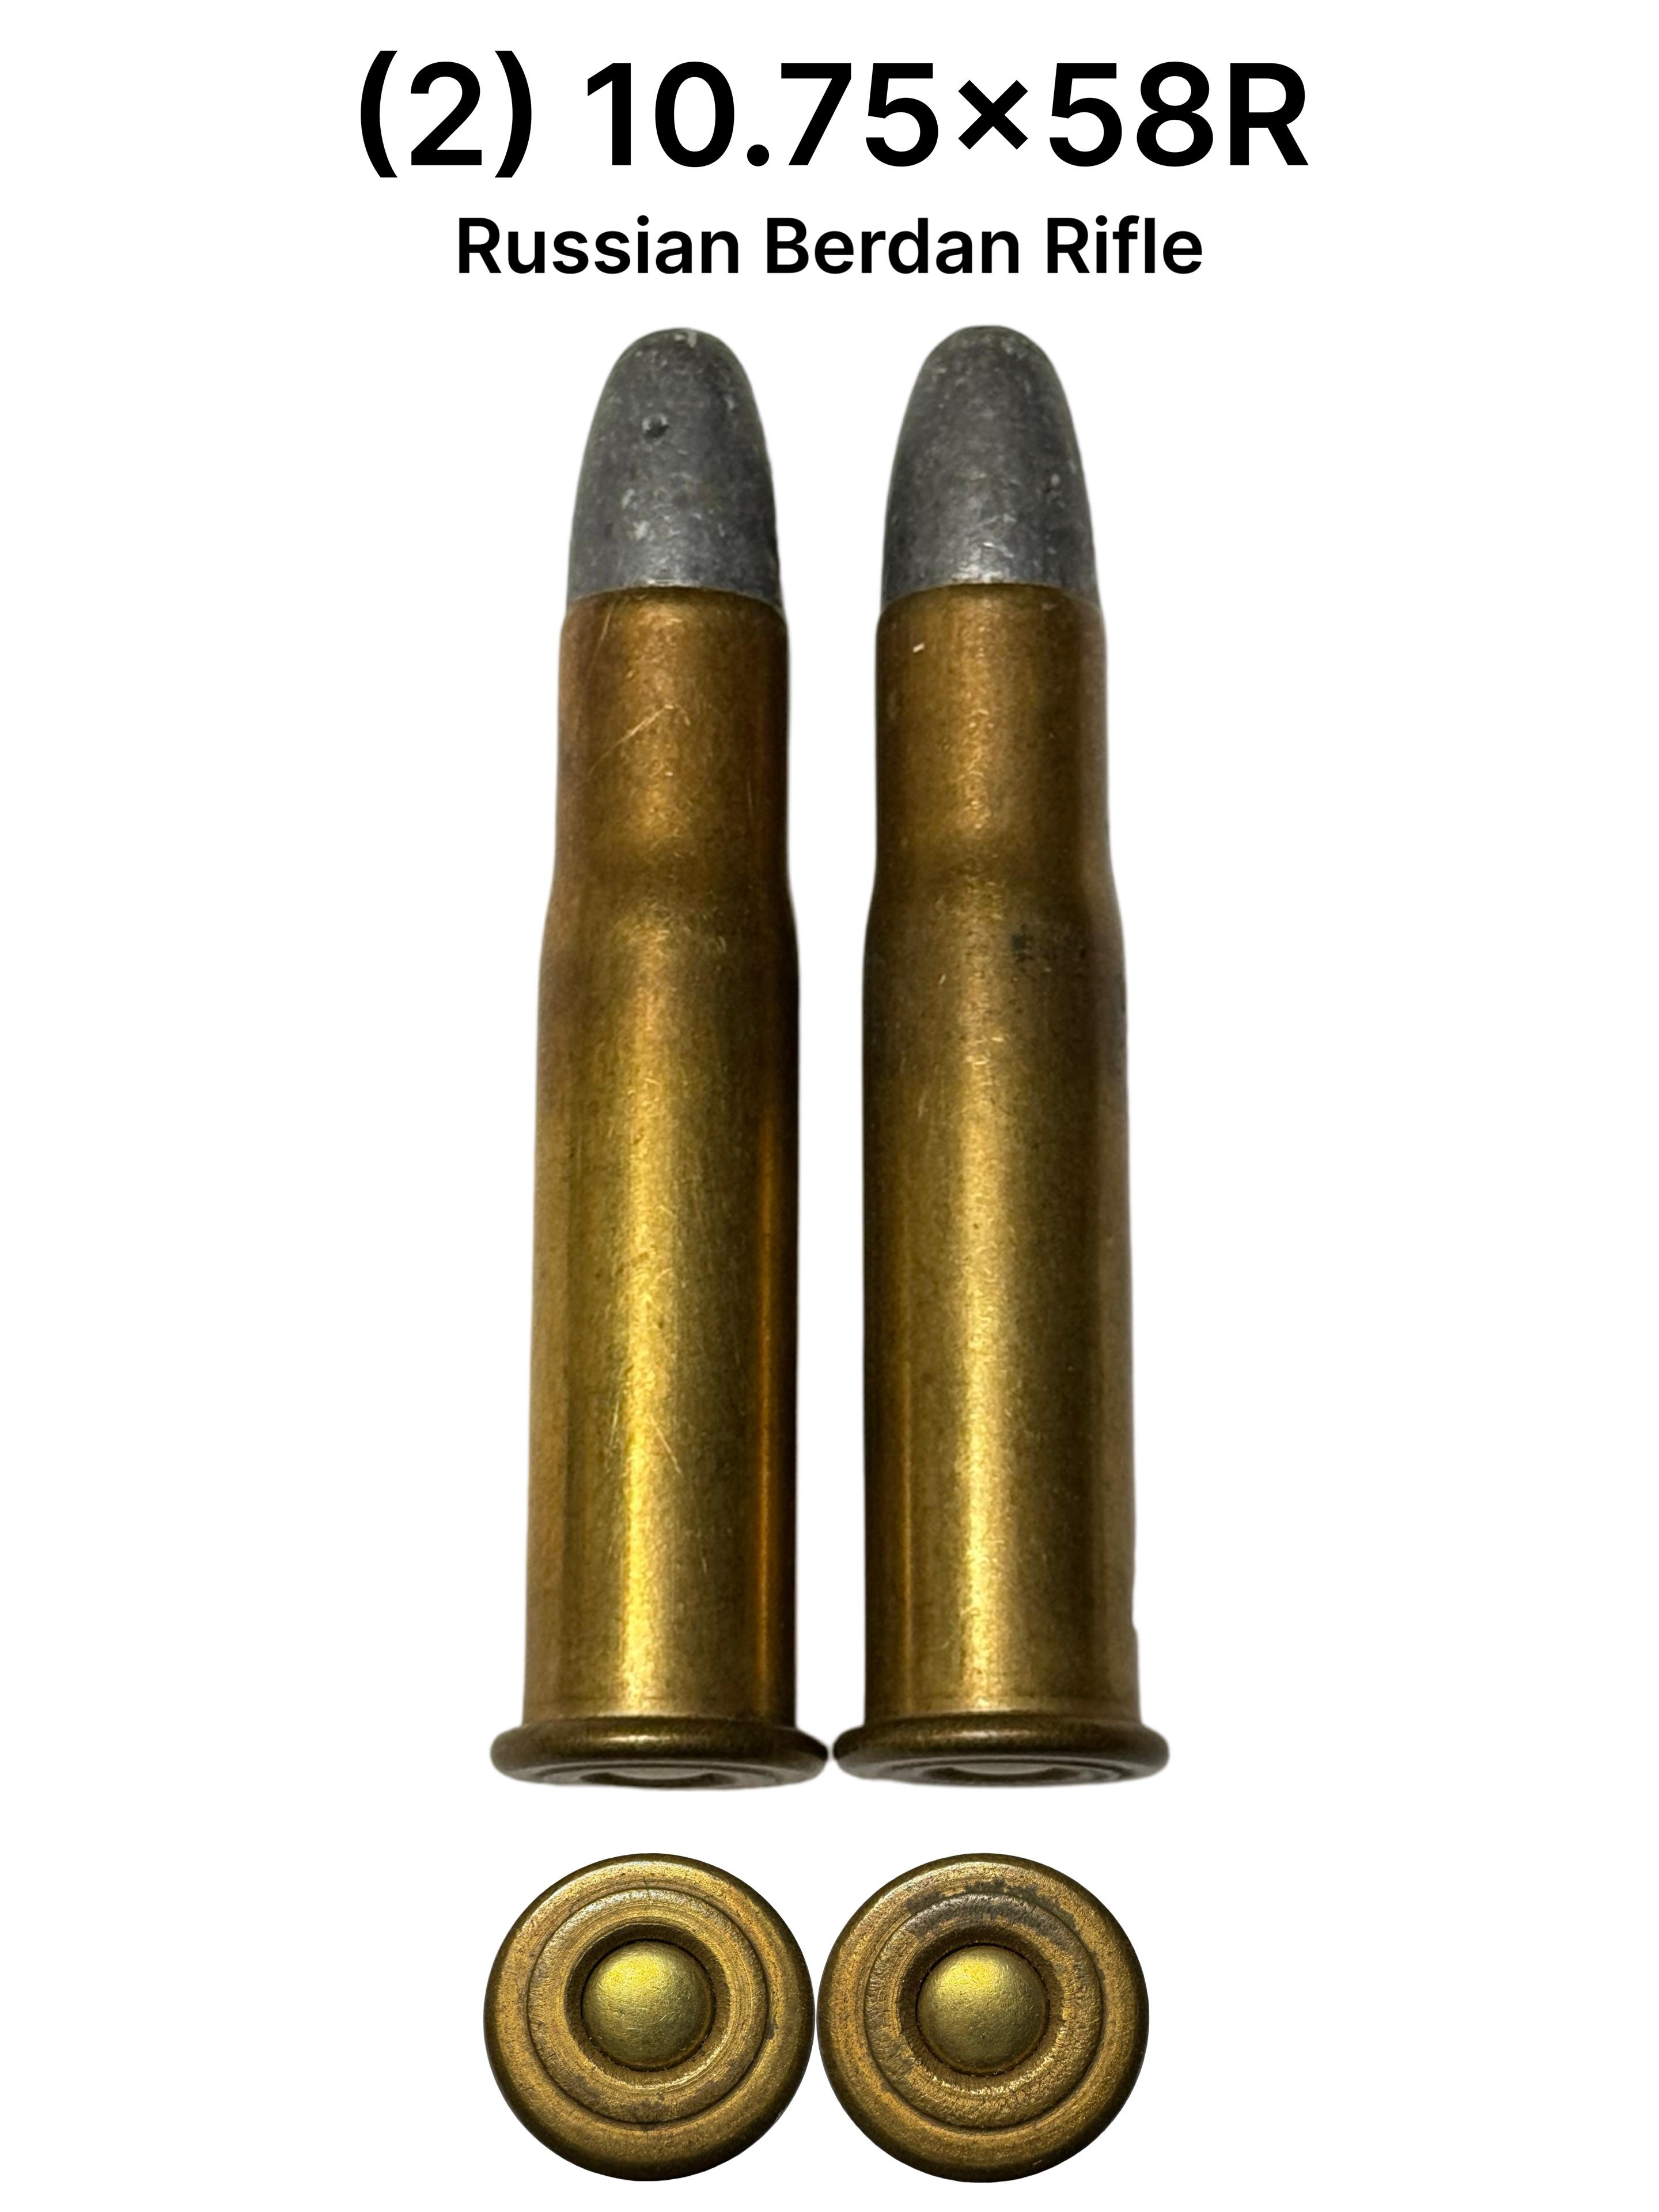 (2) 10.75x58R Cartridges for Russian Berdan Rifle